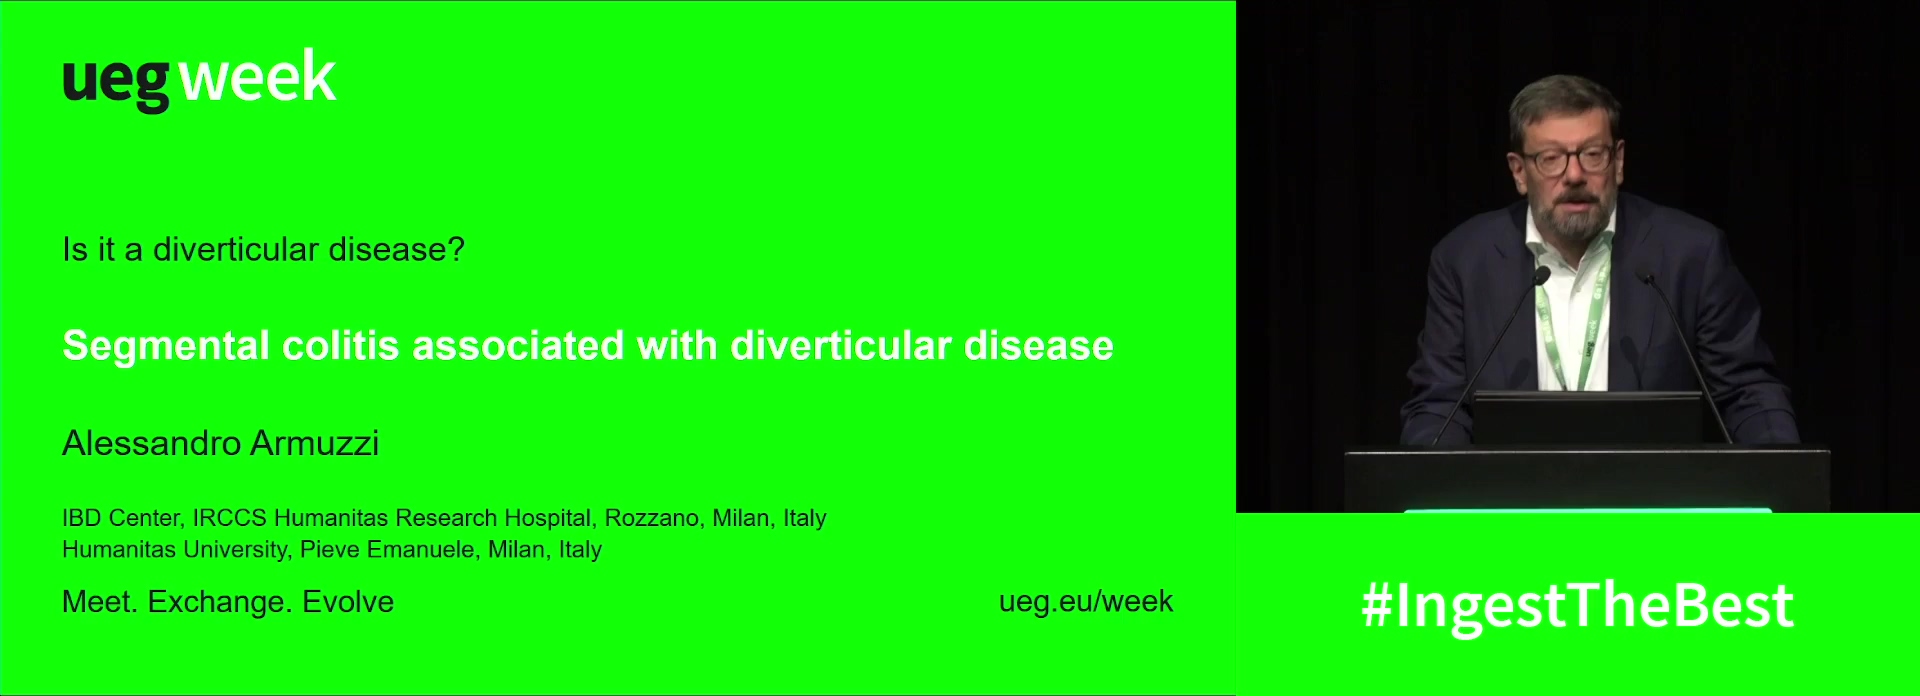 Segmental colitis associated with diverticular disease